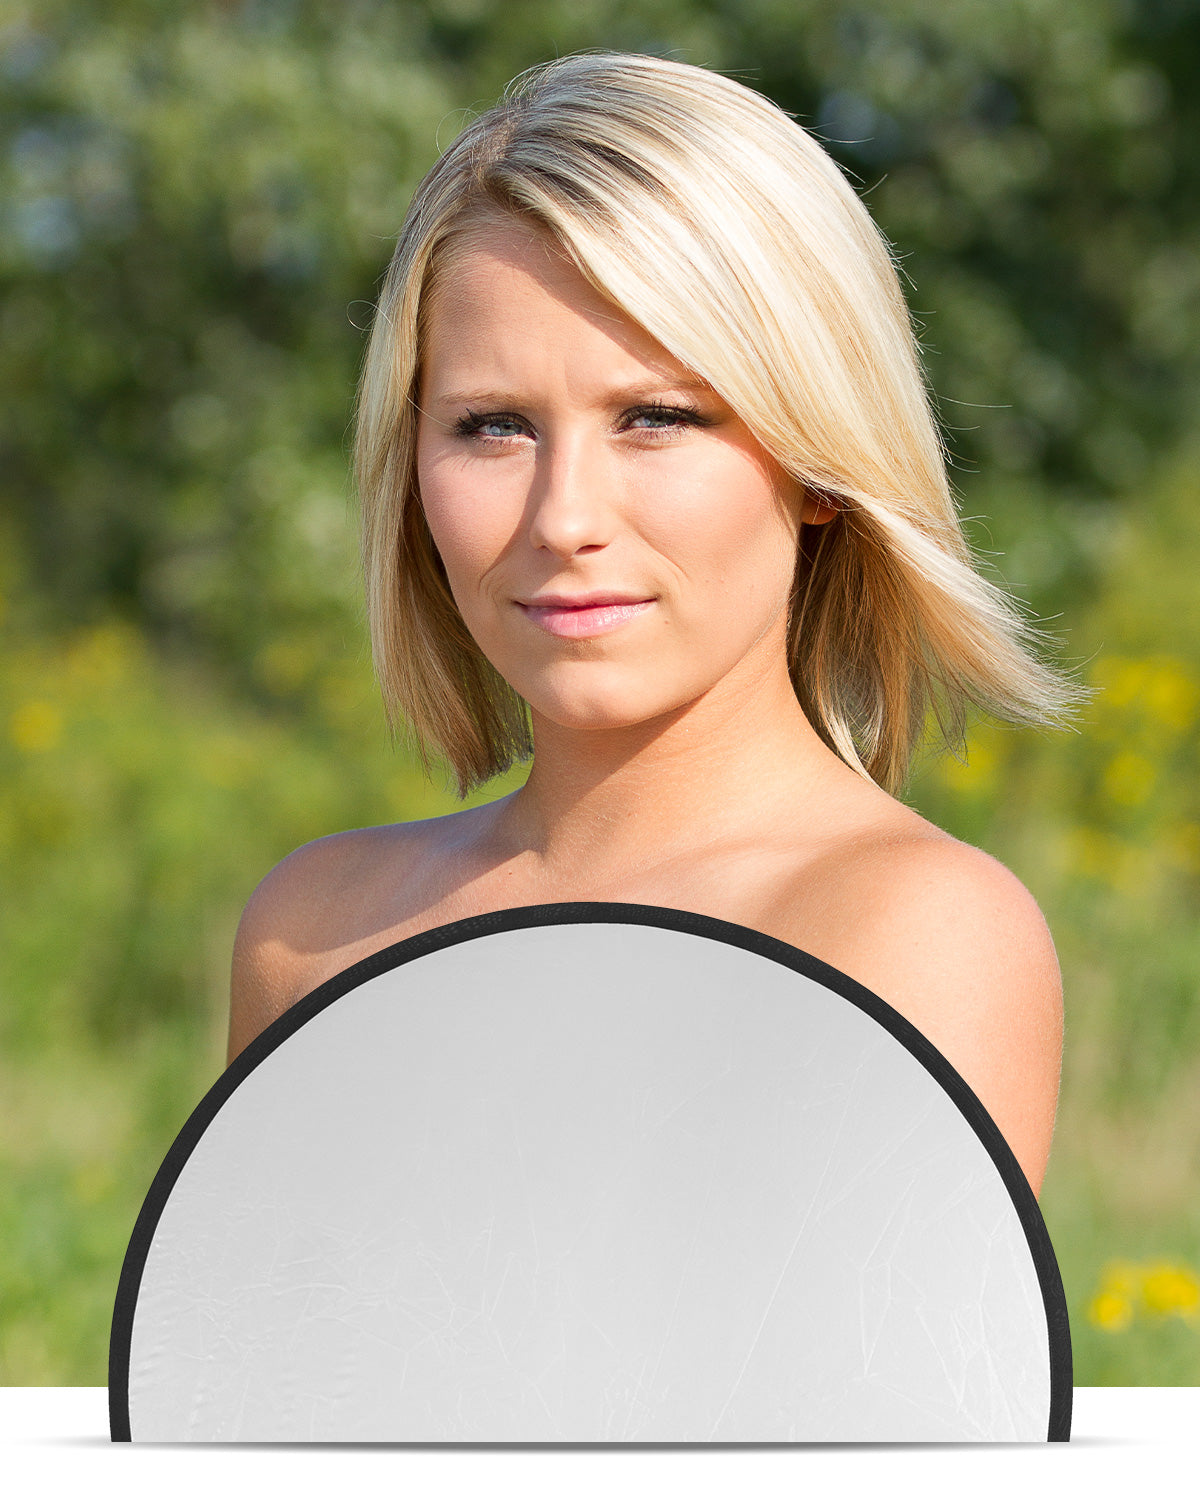 Outdoor Portrait Using White Round Reflector